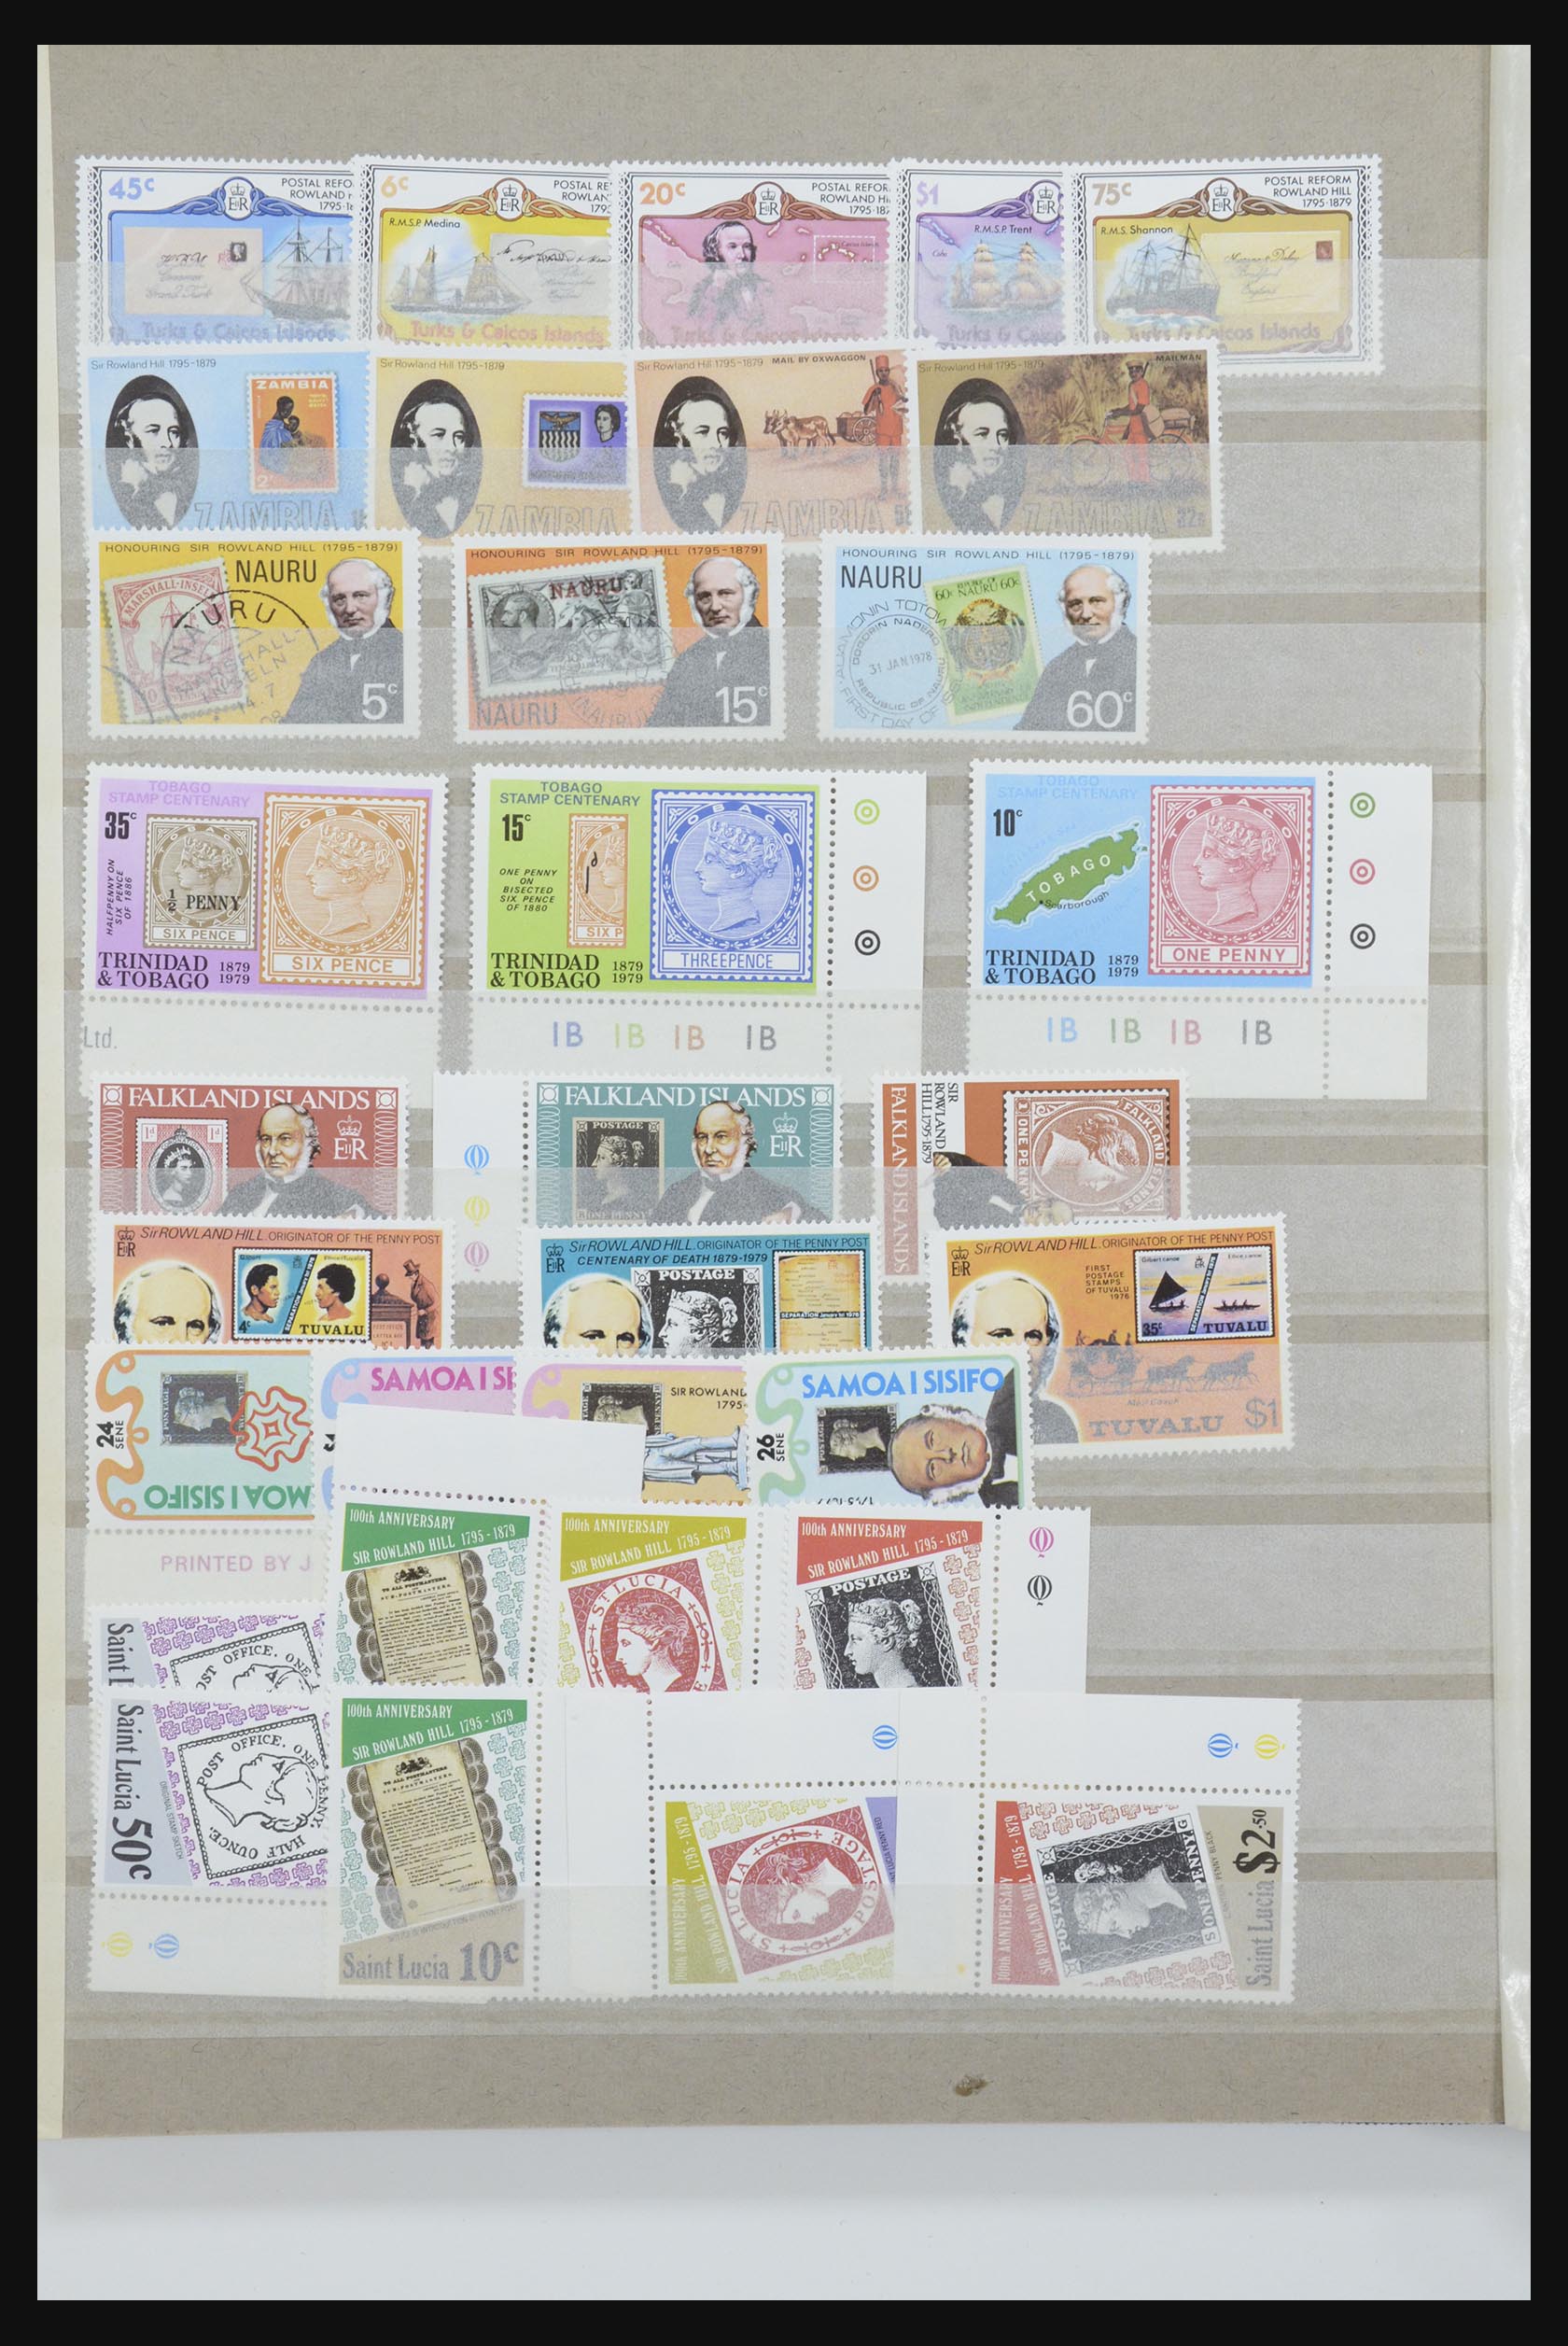 31652 094 - 31652 Motief: postzegel op postzegel 1940-1993.